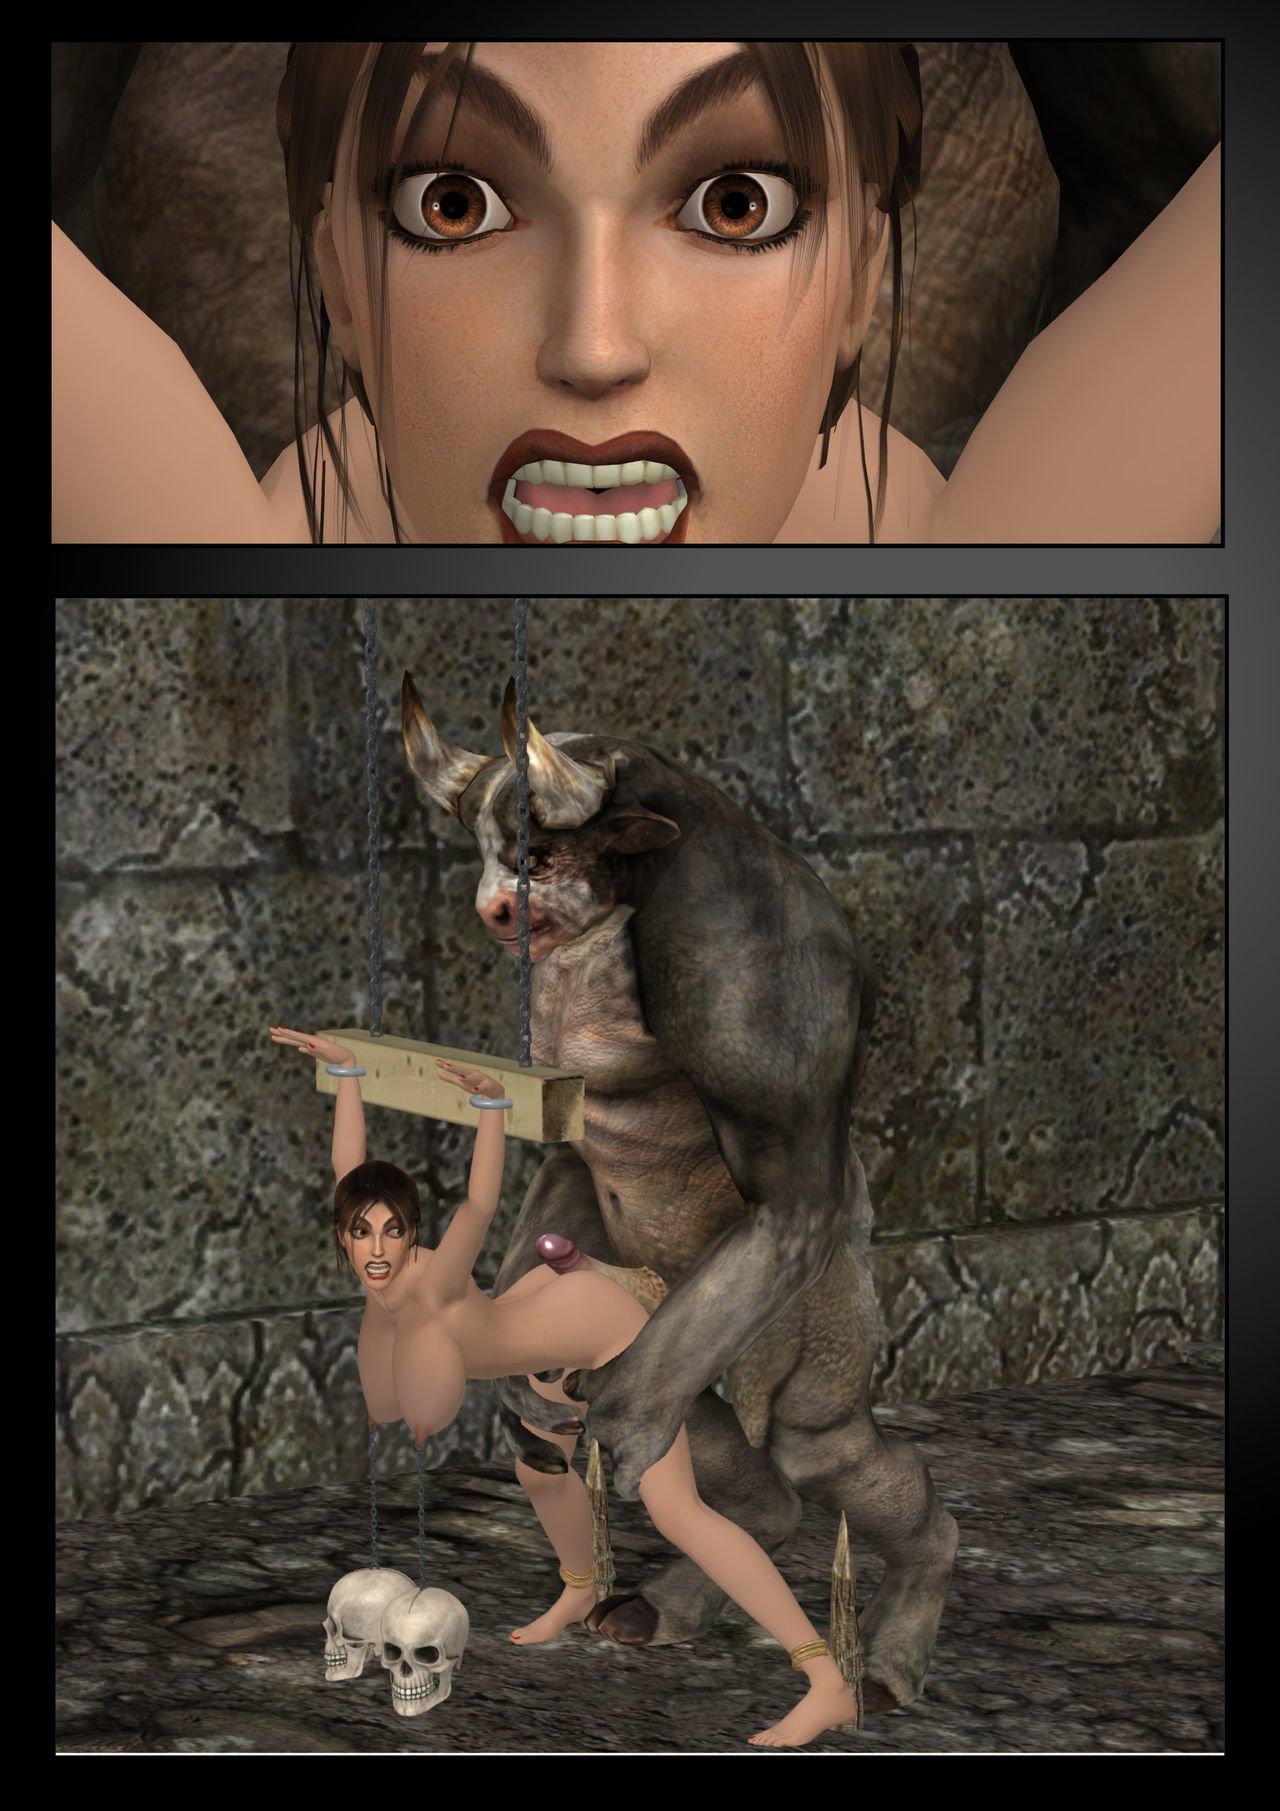 Lara Croft đấu với những minotaurus w.i.p.